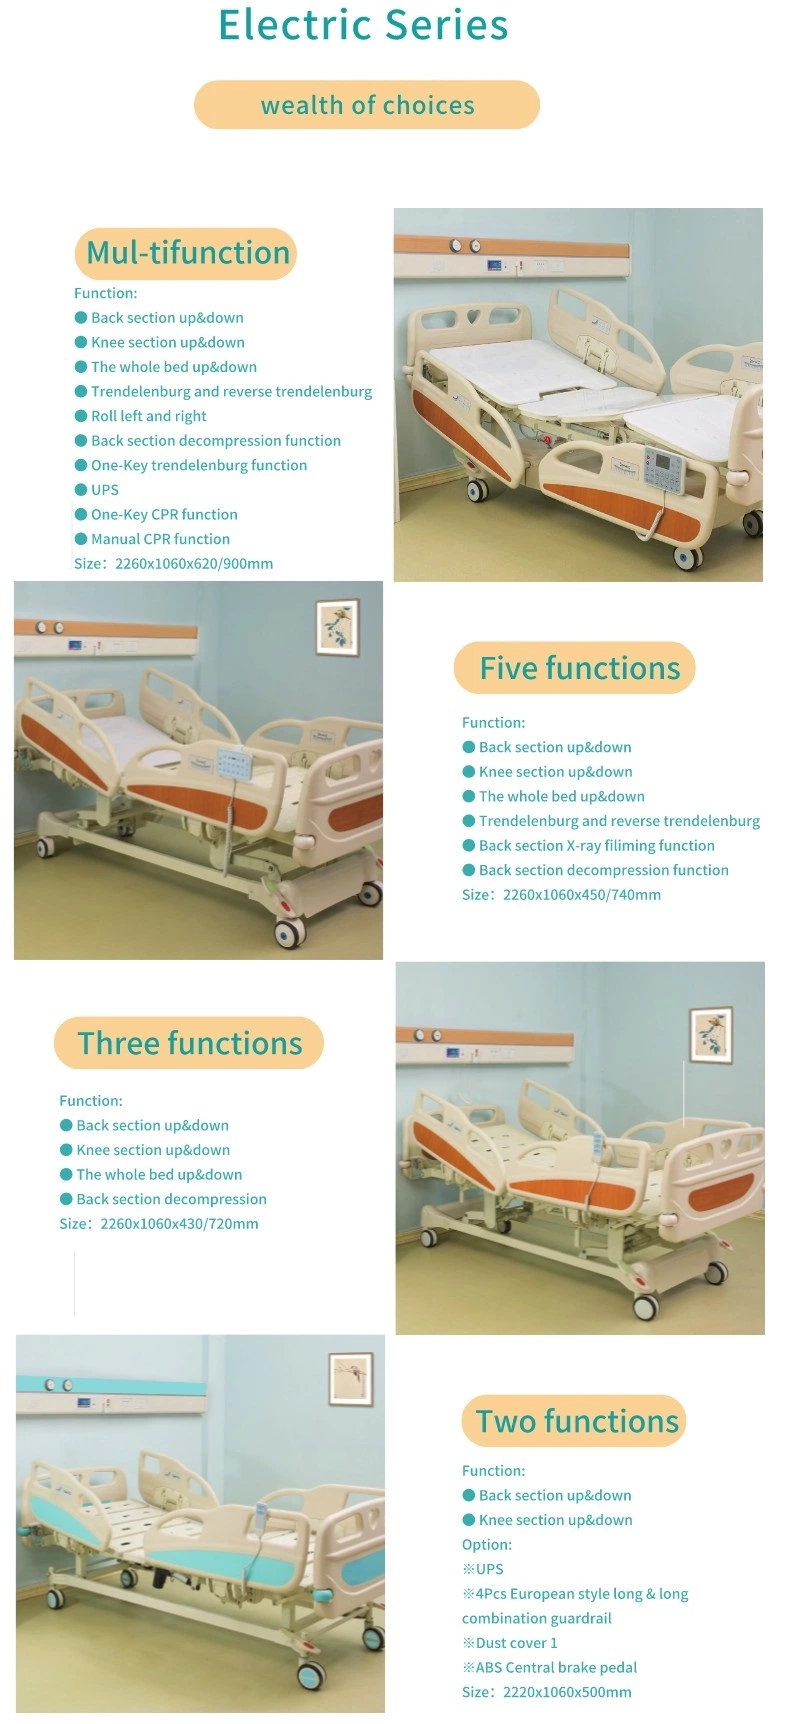 GS-828f Hospital Ward Bed Children Care Patient Nursing Medical Electric Pediatric ICU Bed